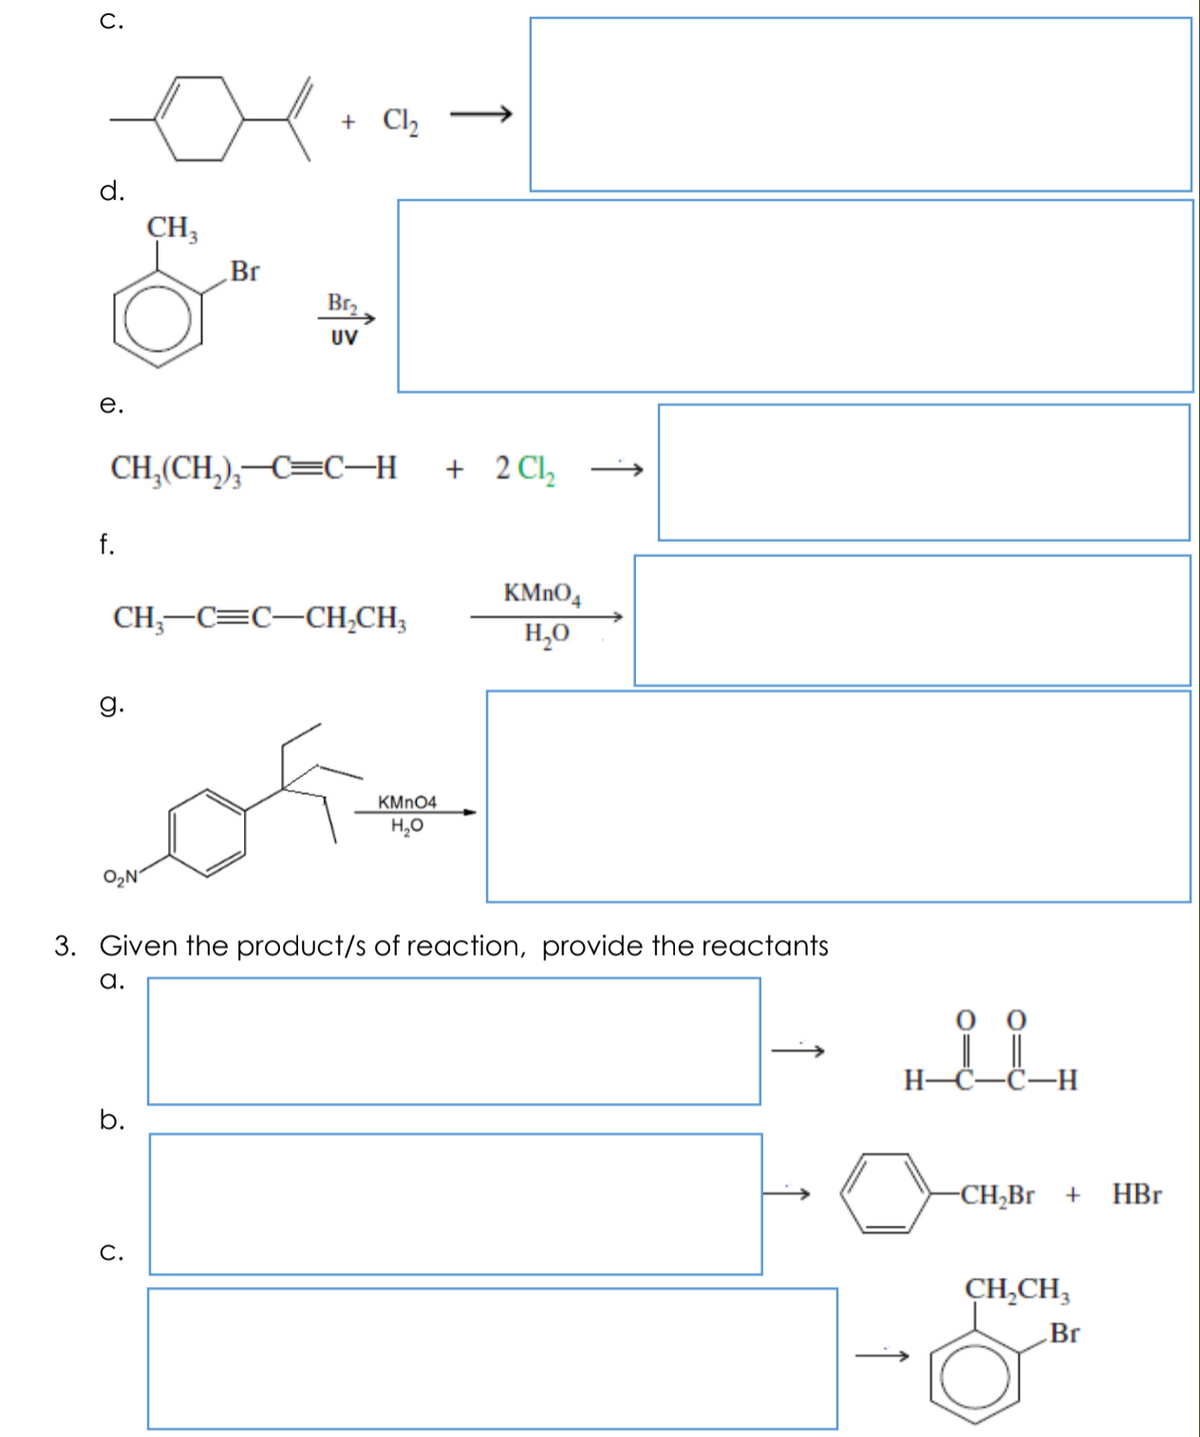 С.
+ Cl,
d.
CH3
Br
Brz
UV
е.
CH,(CH,),-C=C–H
+ 2 Cl,
f.
KMNO4
CH;-C=C-CH,CH;
H,0
g.
KMNO4
H,0
O,N
3. Given the product/s of reaction, provide the reactants
а.
оо
H-C-C-H
b.
-CH;Br +
HBr
С.
CH,CH,
Br
↑
↑
